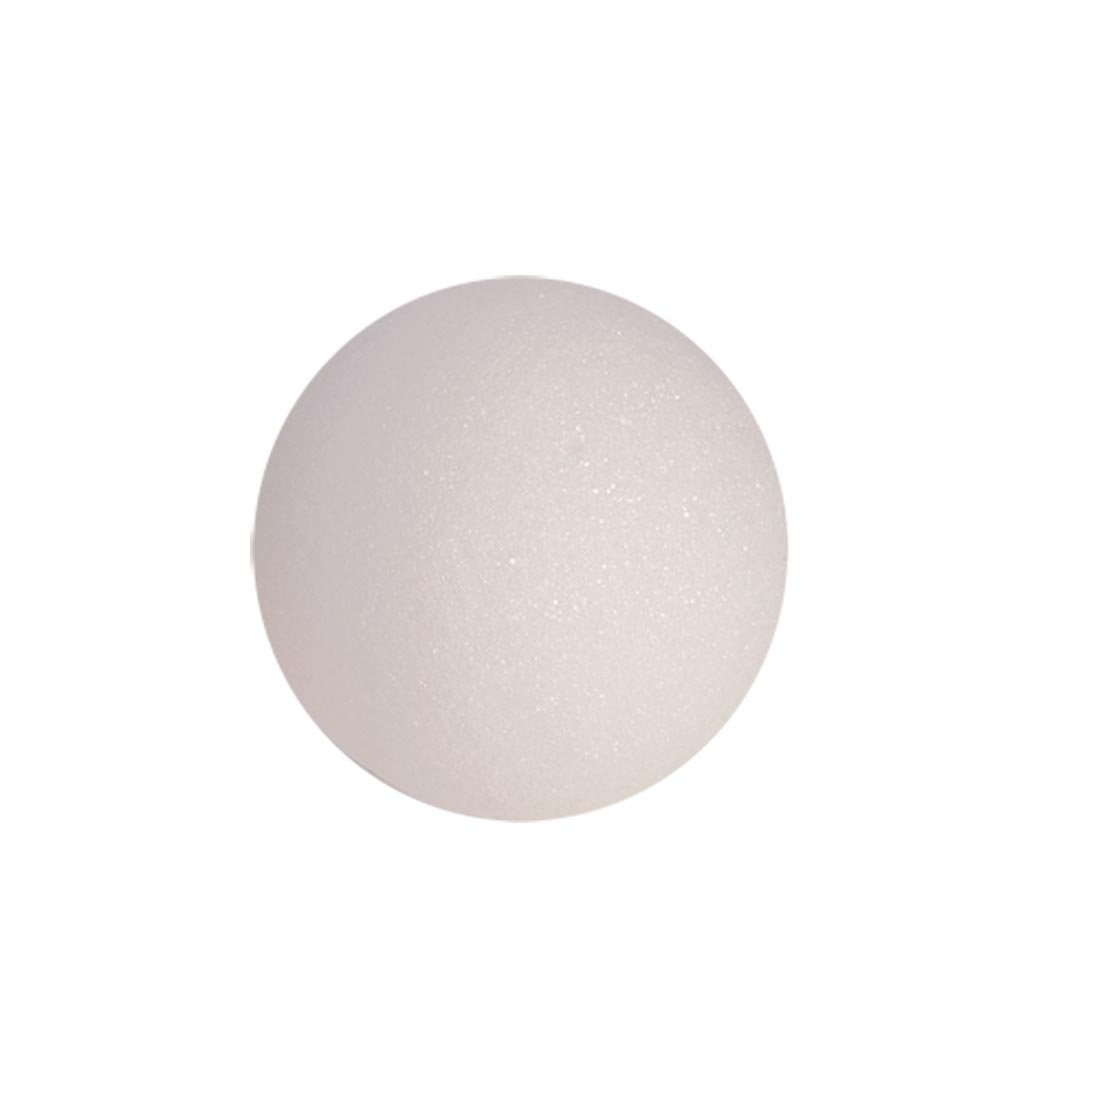 White craft foam Ball